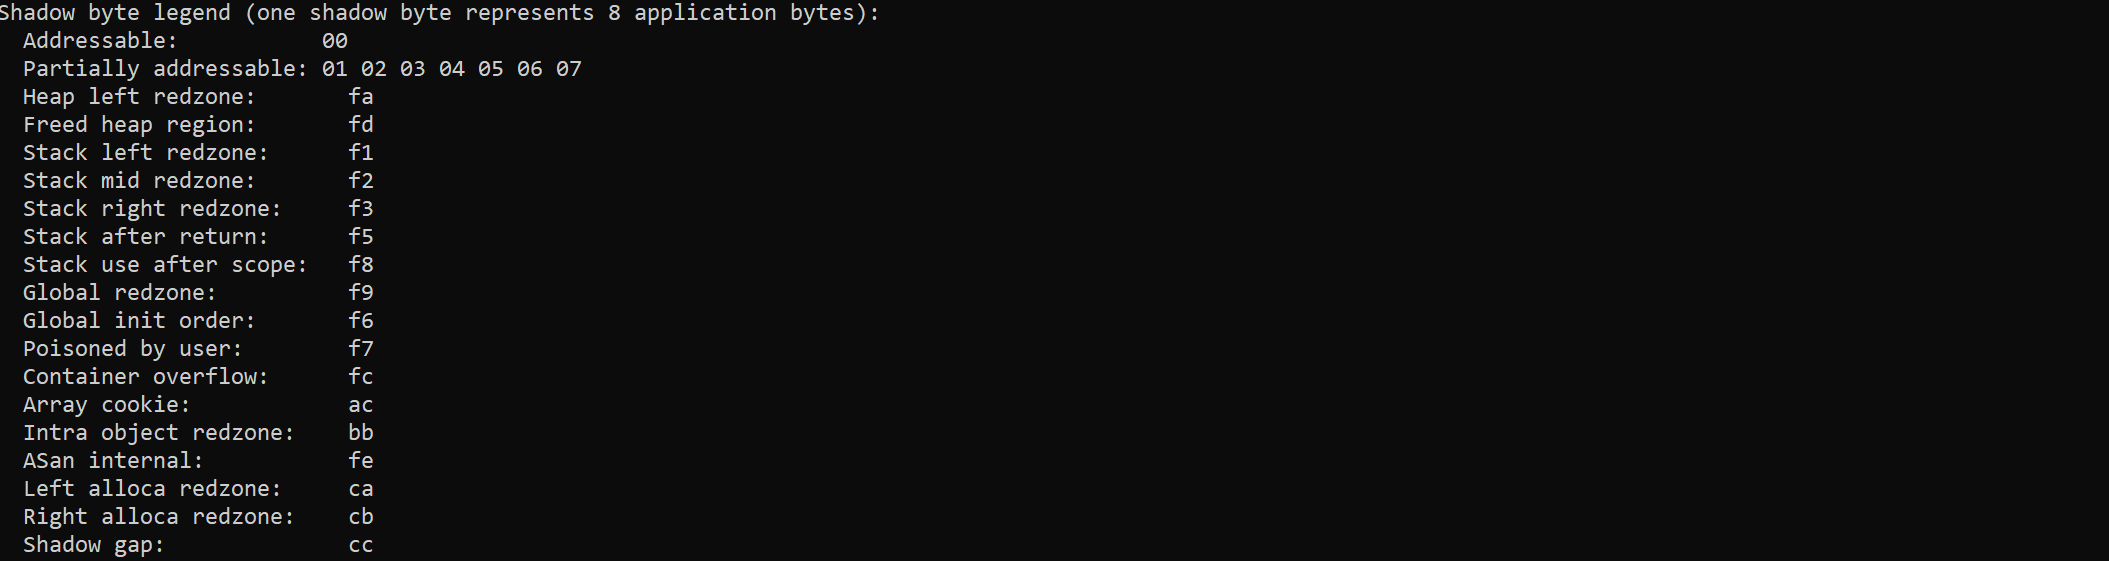 Screenshot of the AddressSanitizer shadow-byte legend.